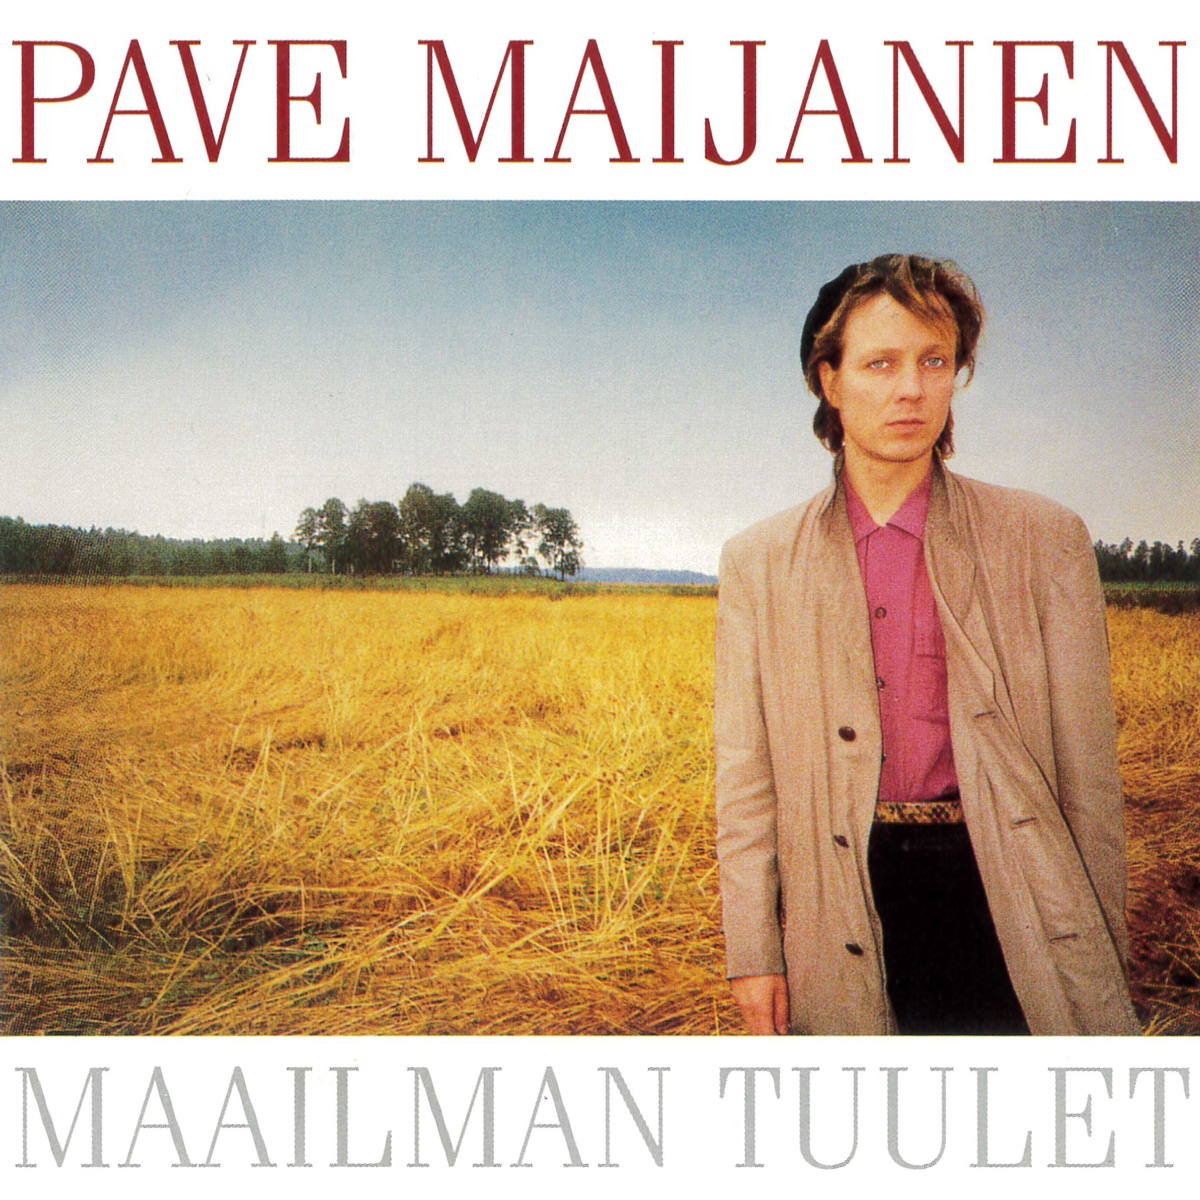 Maijanen by Pave Maijanen on Apple Music